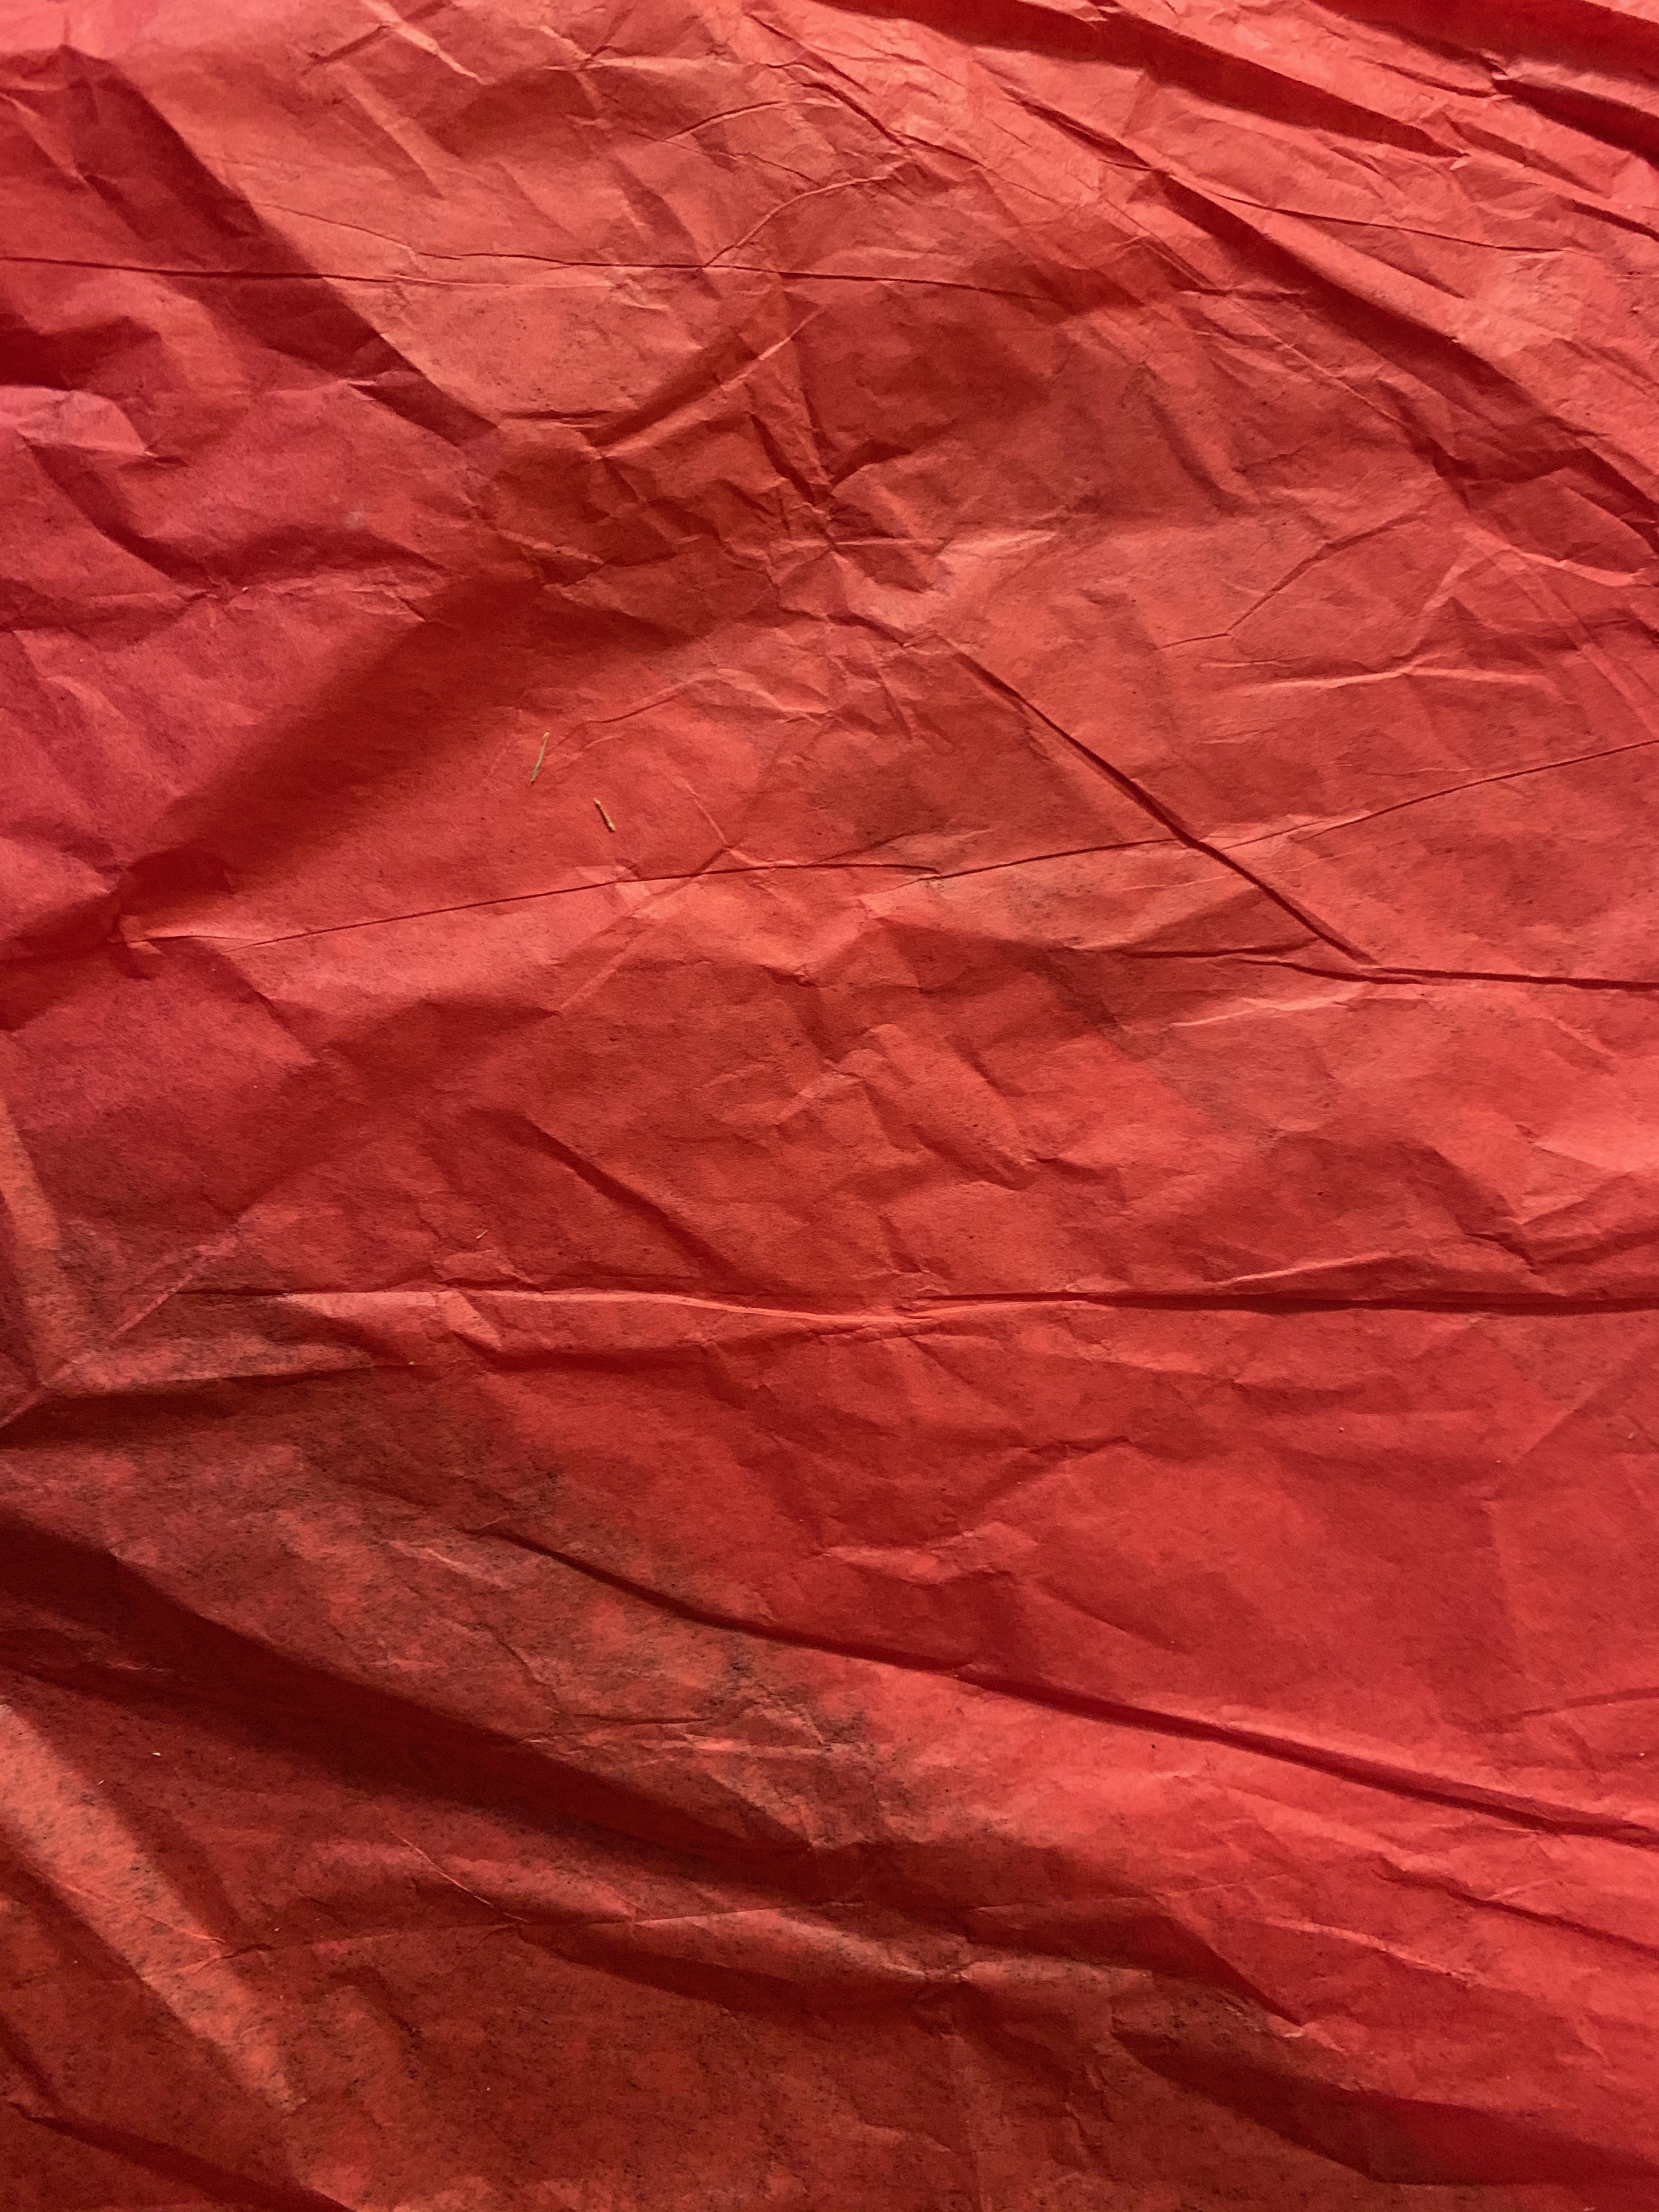 Wrinkled red paper